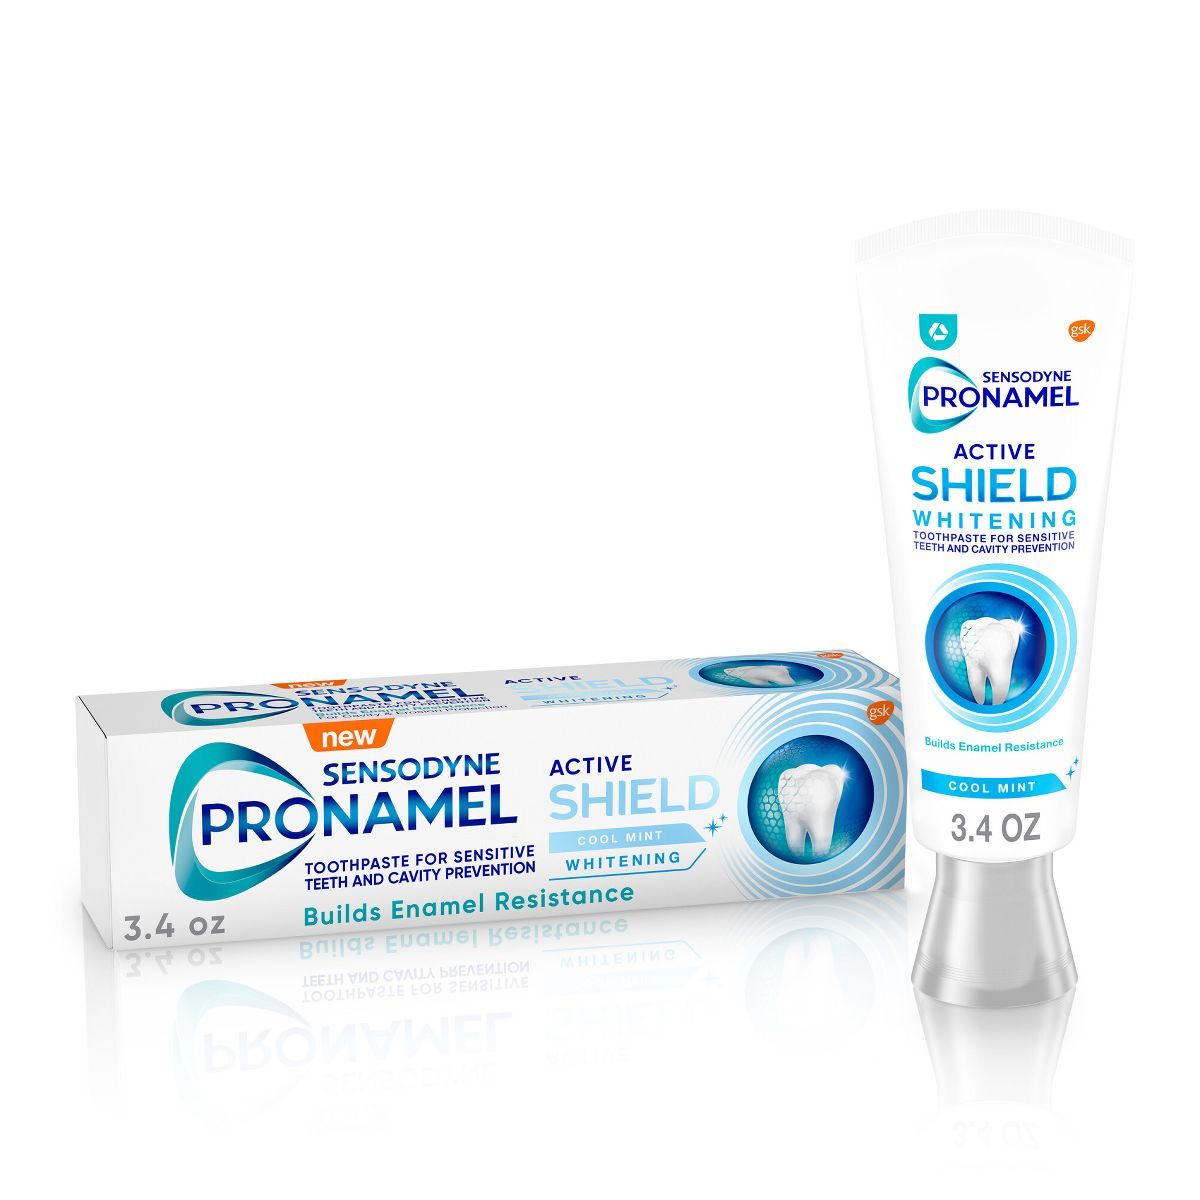 Sensodyne Pronamel Active Shield Whitening Toothpaste - Cool Mint - 3.4oz/1pk | Target